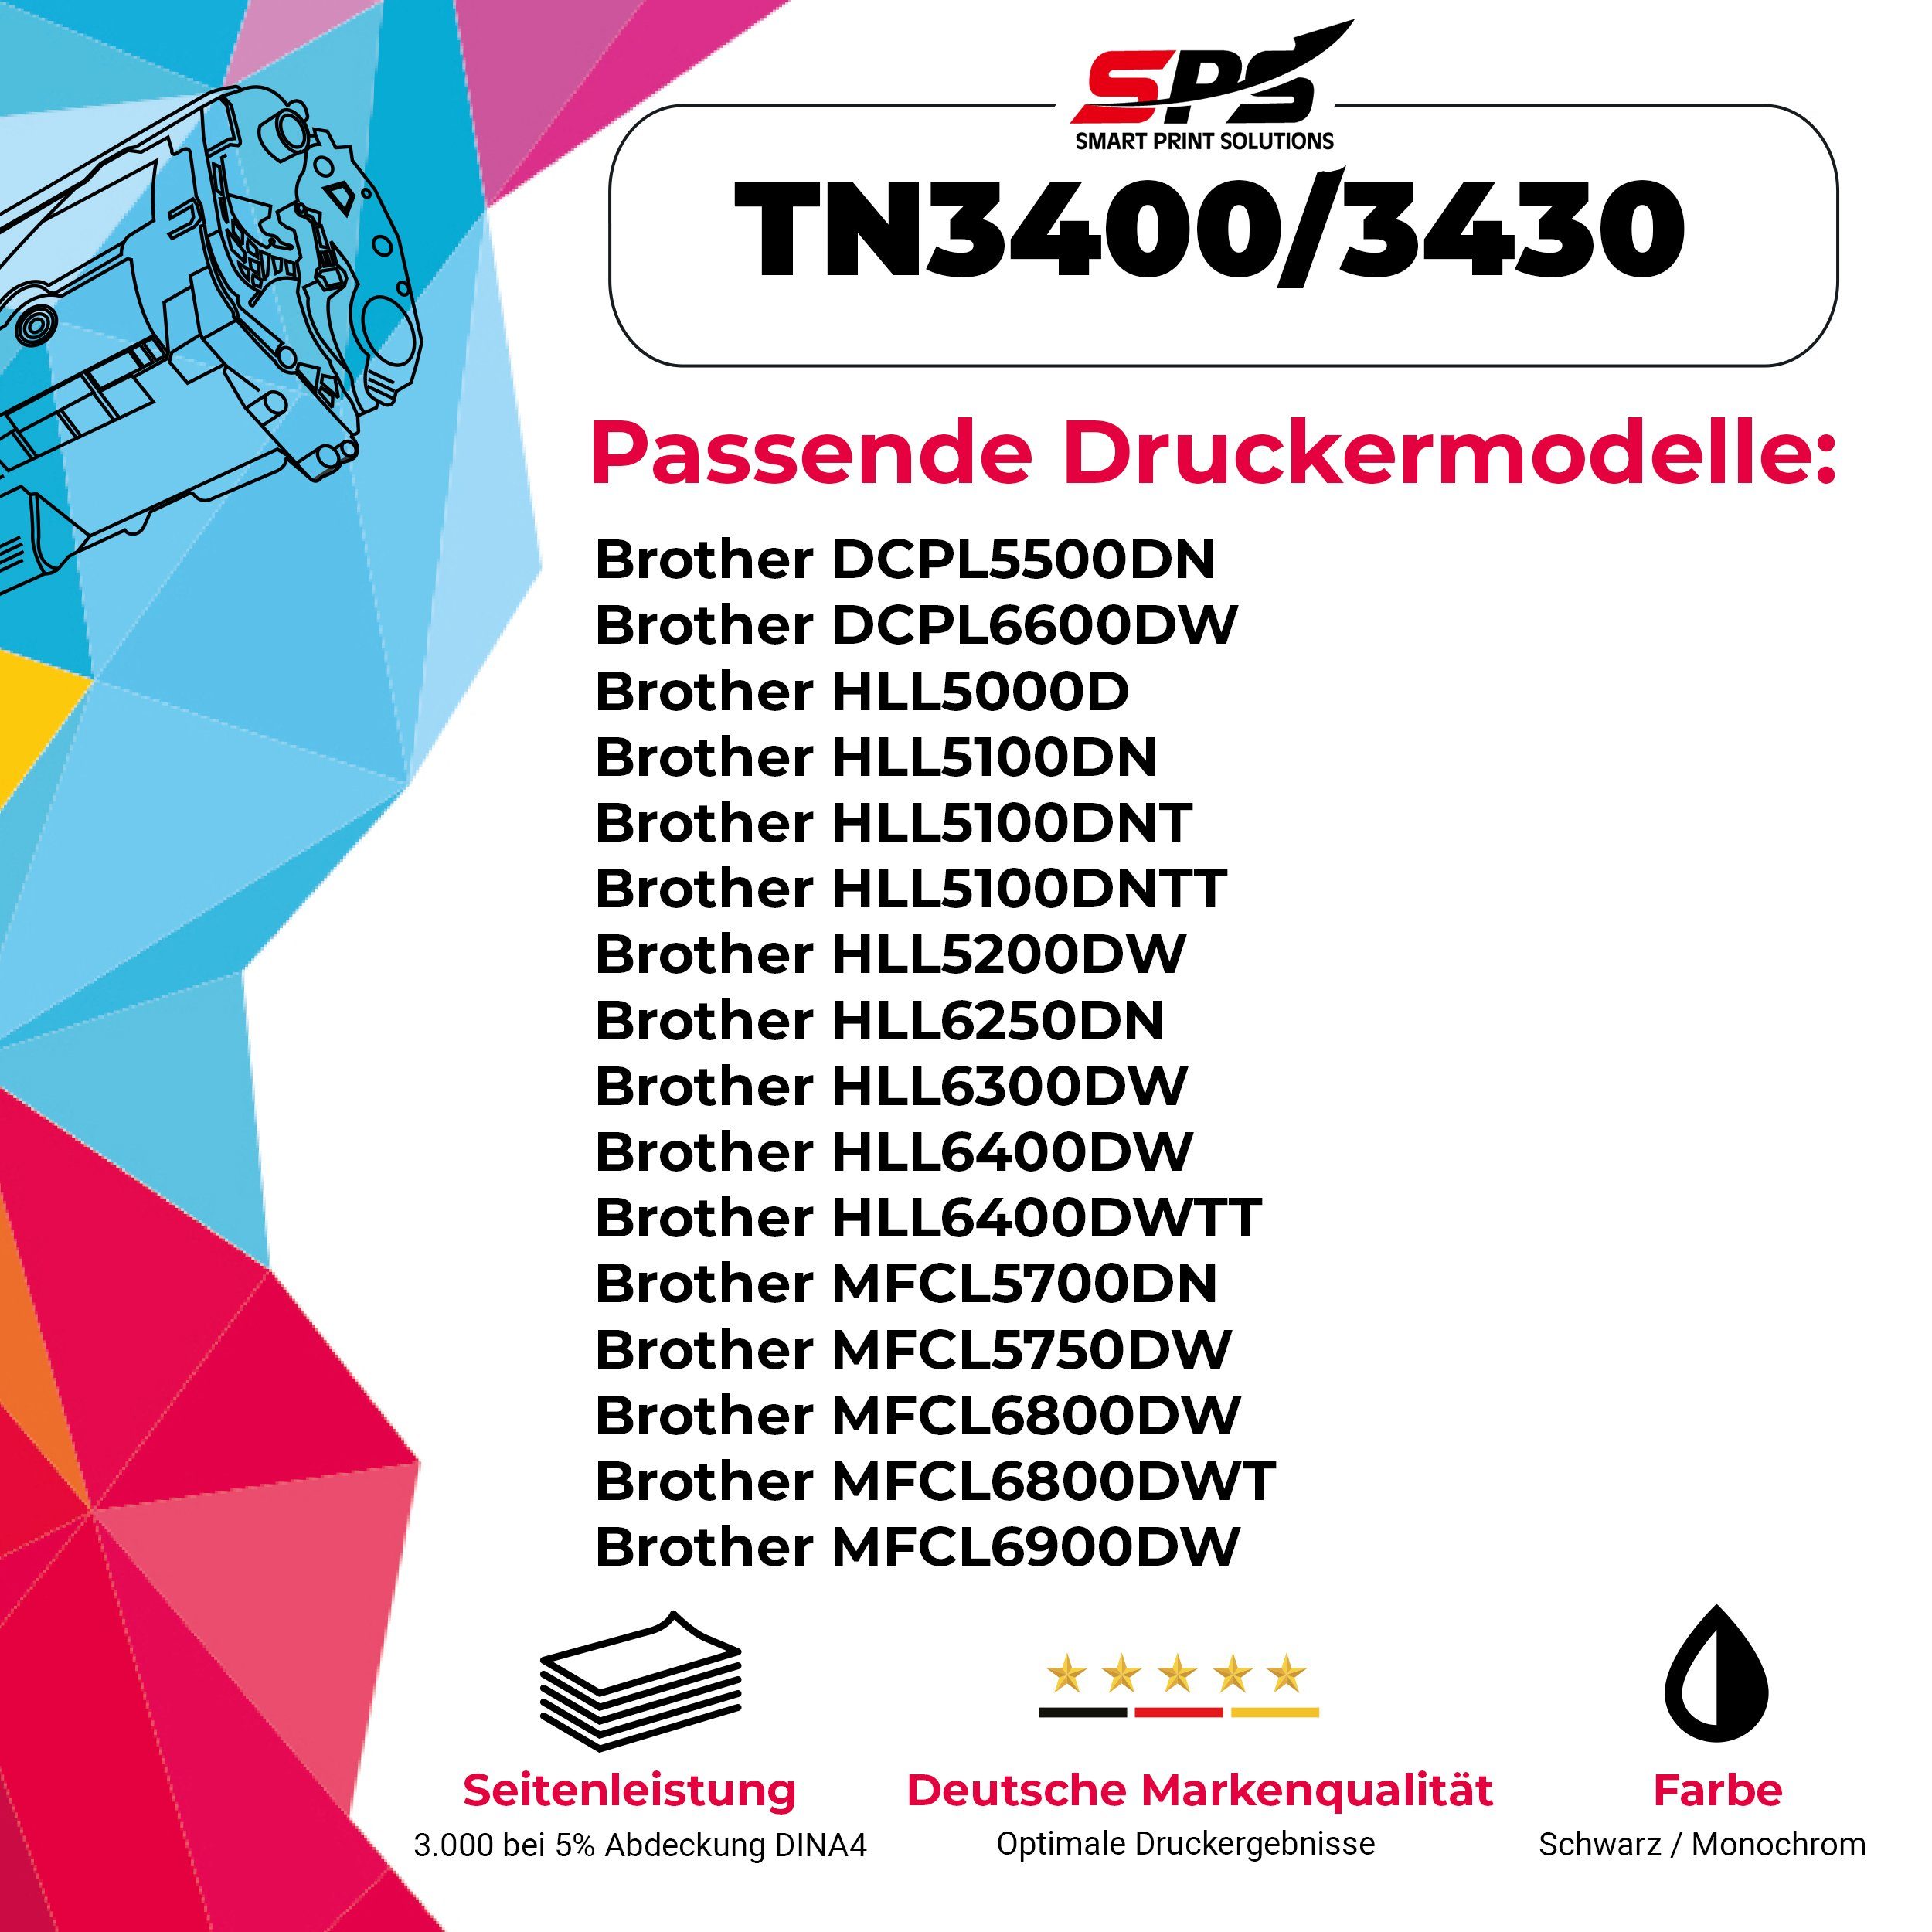 SPS Tonerkartusche Kompatibel 5050DN für (HLL5050DNZU1), HL-L Brother (1er Pack)